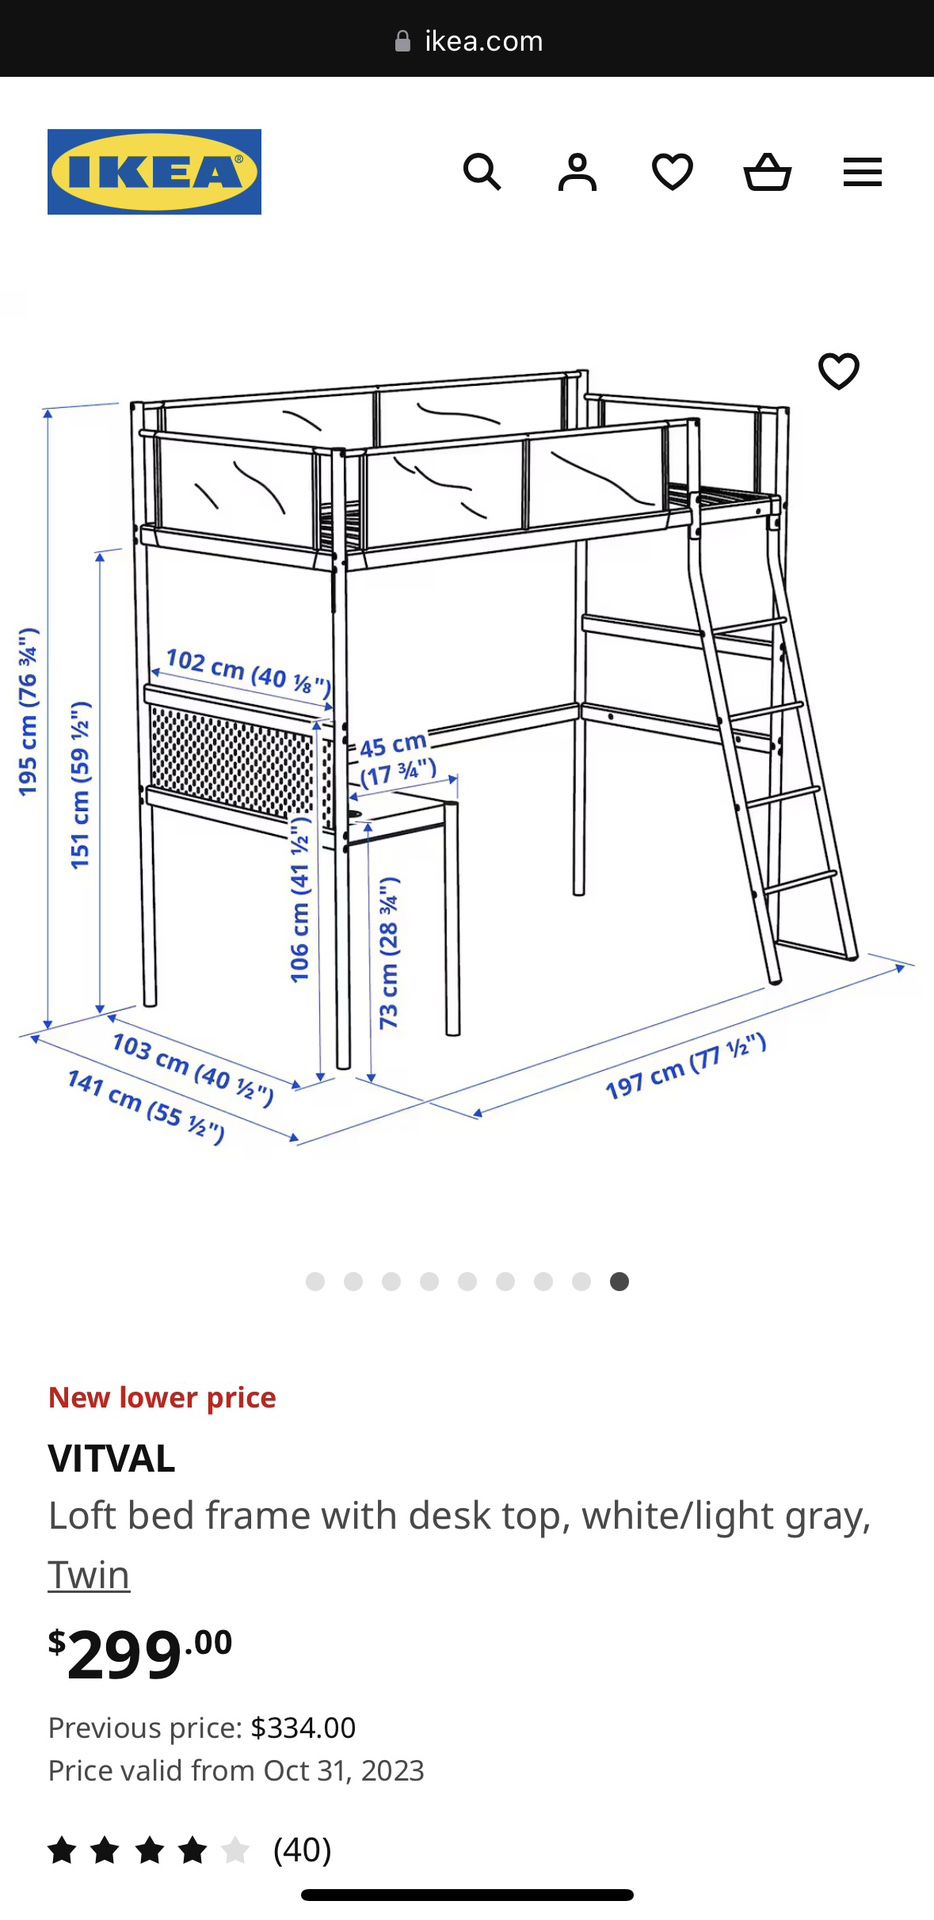 2 IKEA Loft Beds With Desks  For Sale - $150 Each